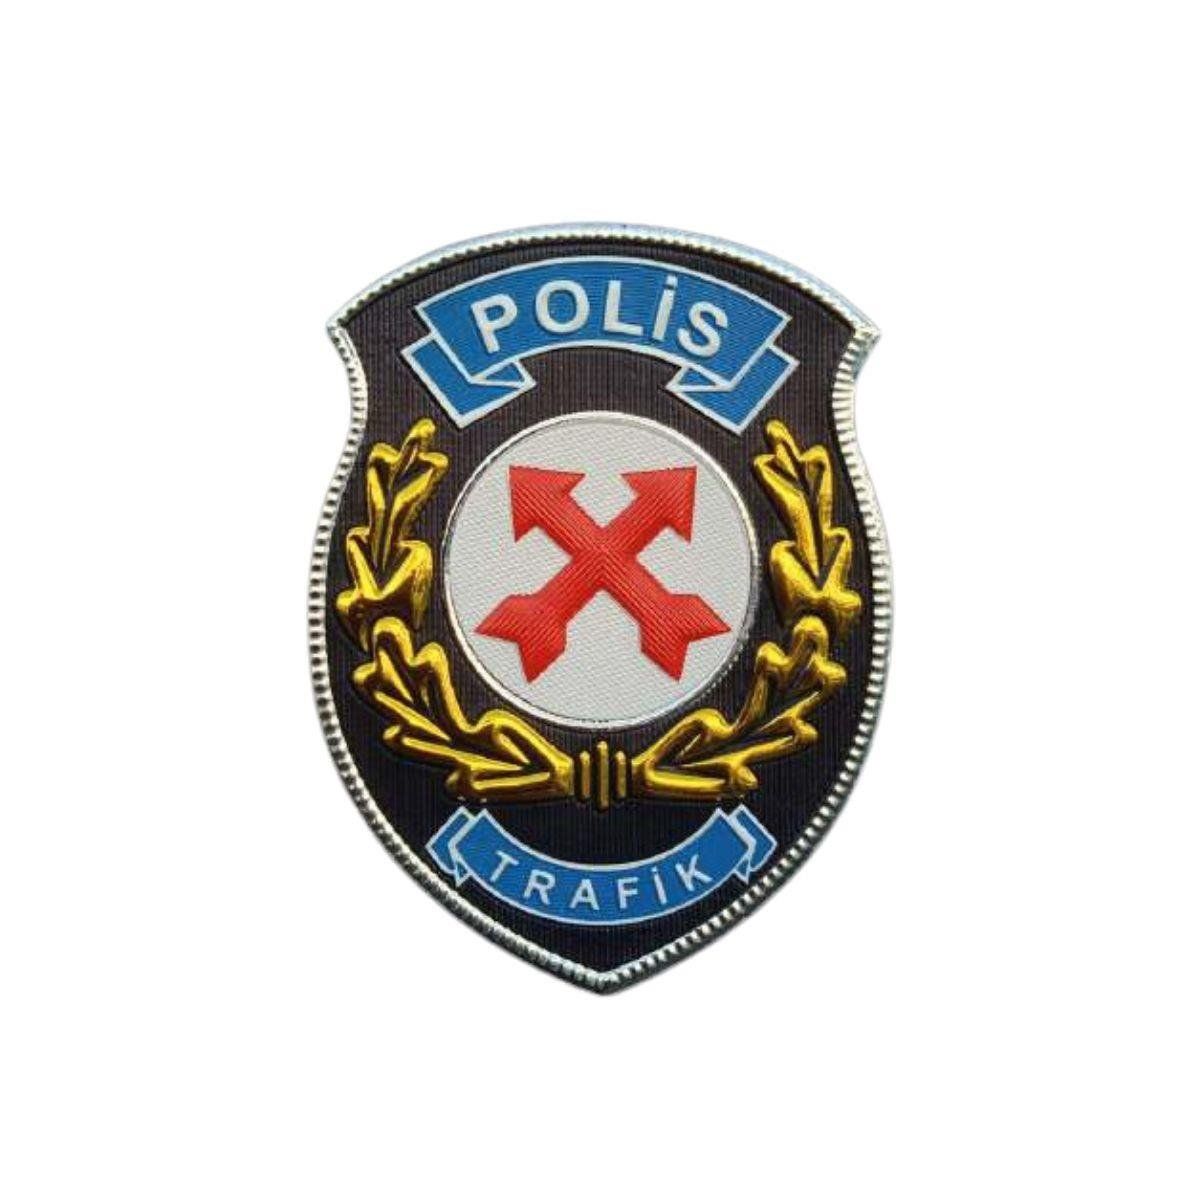 Polis Trafik Göğüs Arması